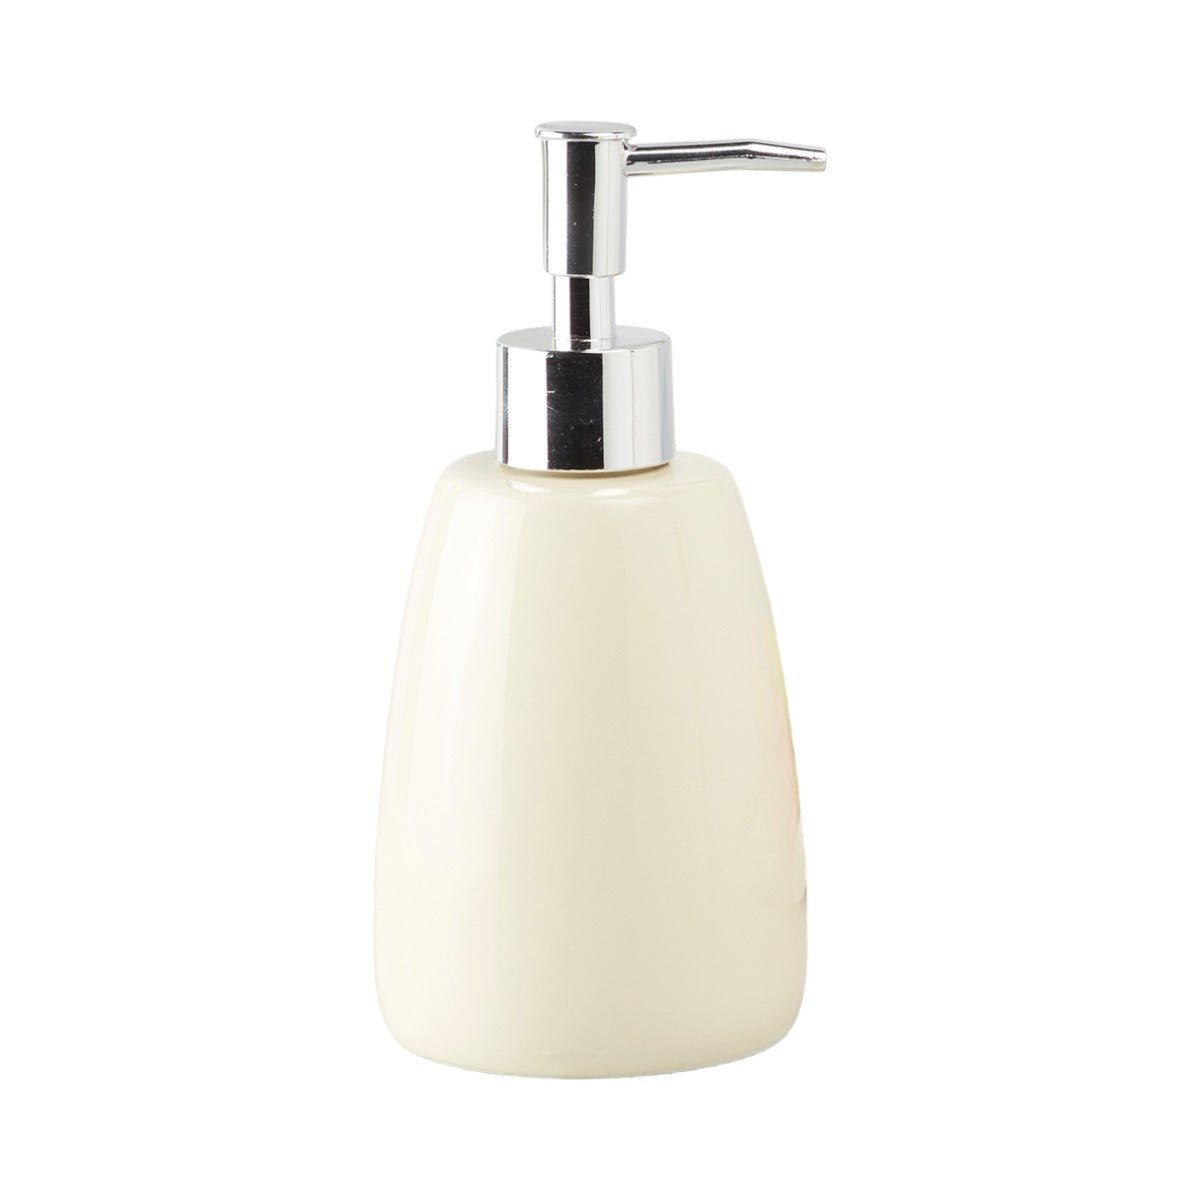 Ceramic Soap Dispenser Pump for Bathroom for Bath Gel, Lotion, Shampoo (6004)